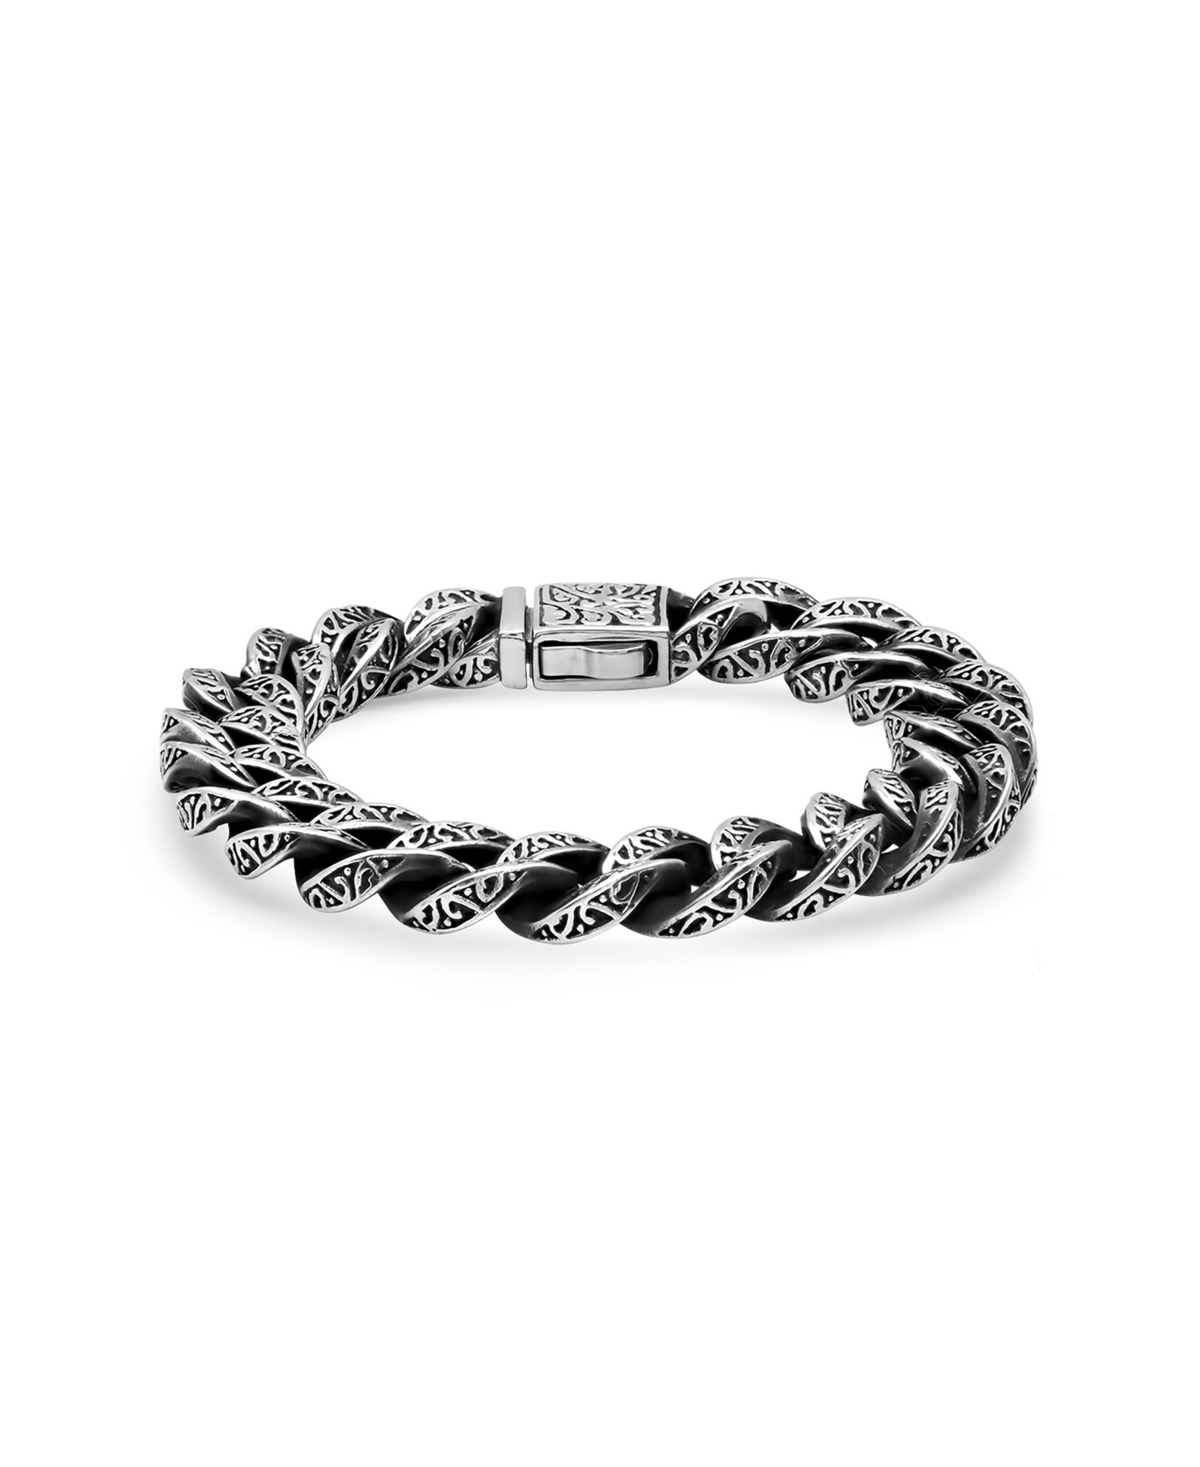 Men's Oxidized Stainless Steel Cuban Link Chain Bracelet - Silver-tone